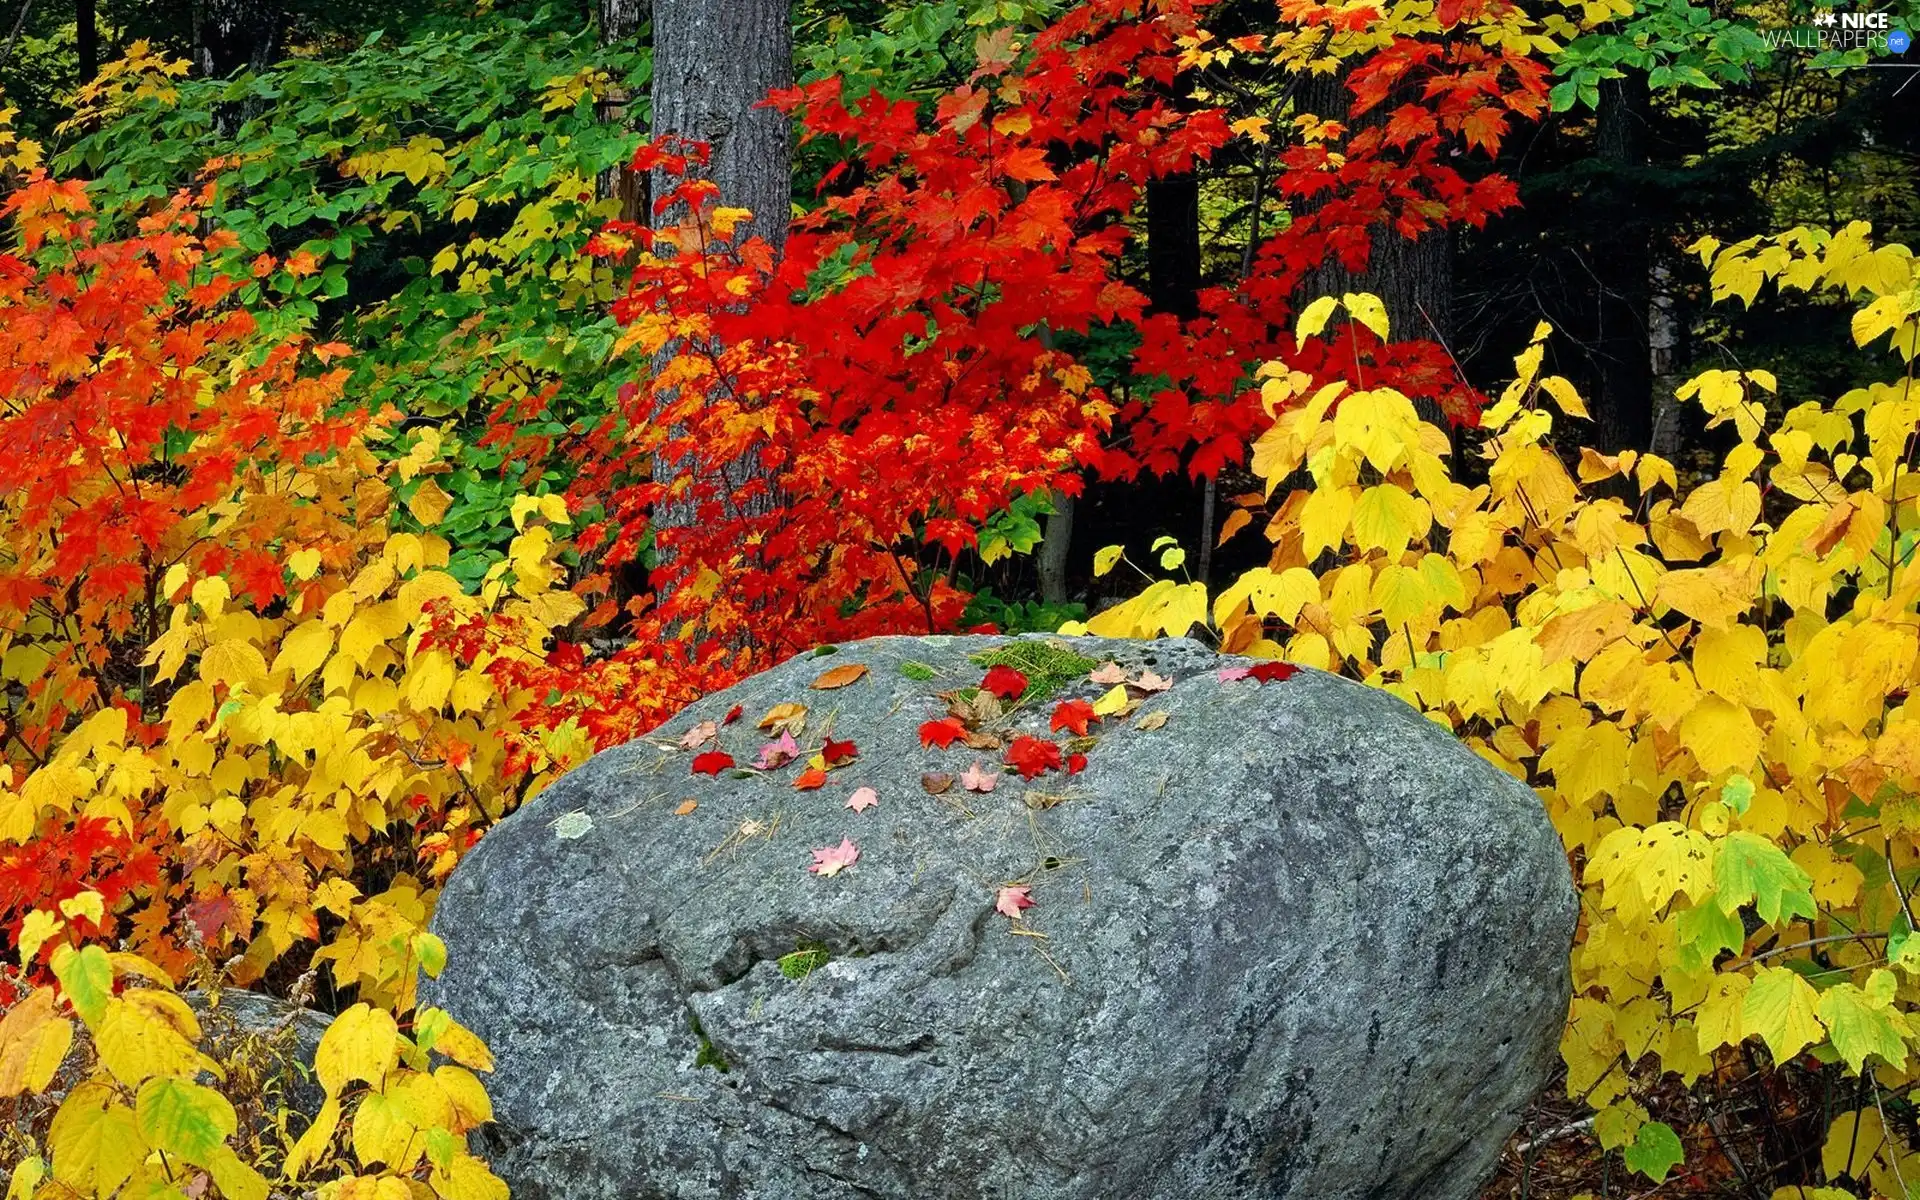 Leaf, Rocks, viewes, color, trees